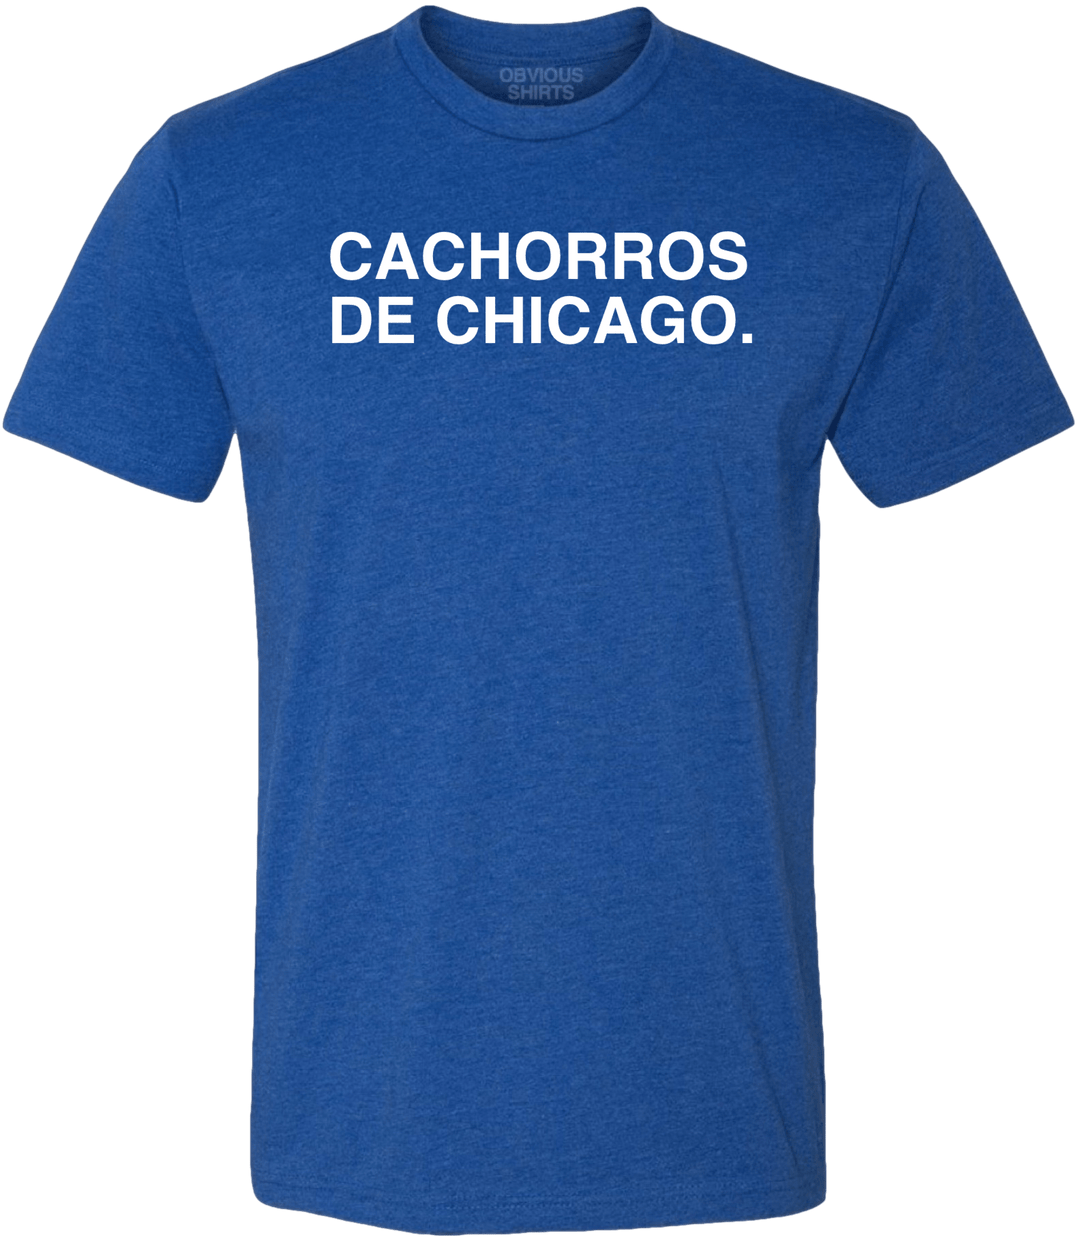 CACHORROS DE CHICAGO. - OBVIOUS SHIRTS